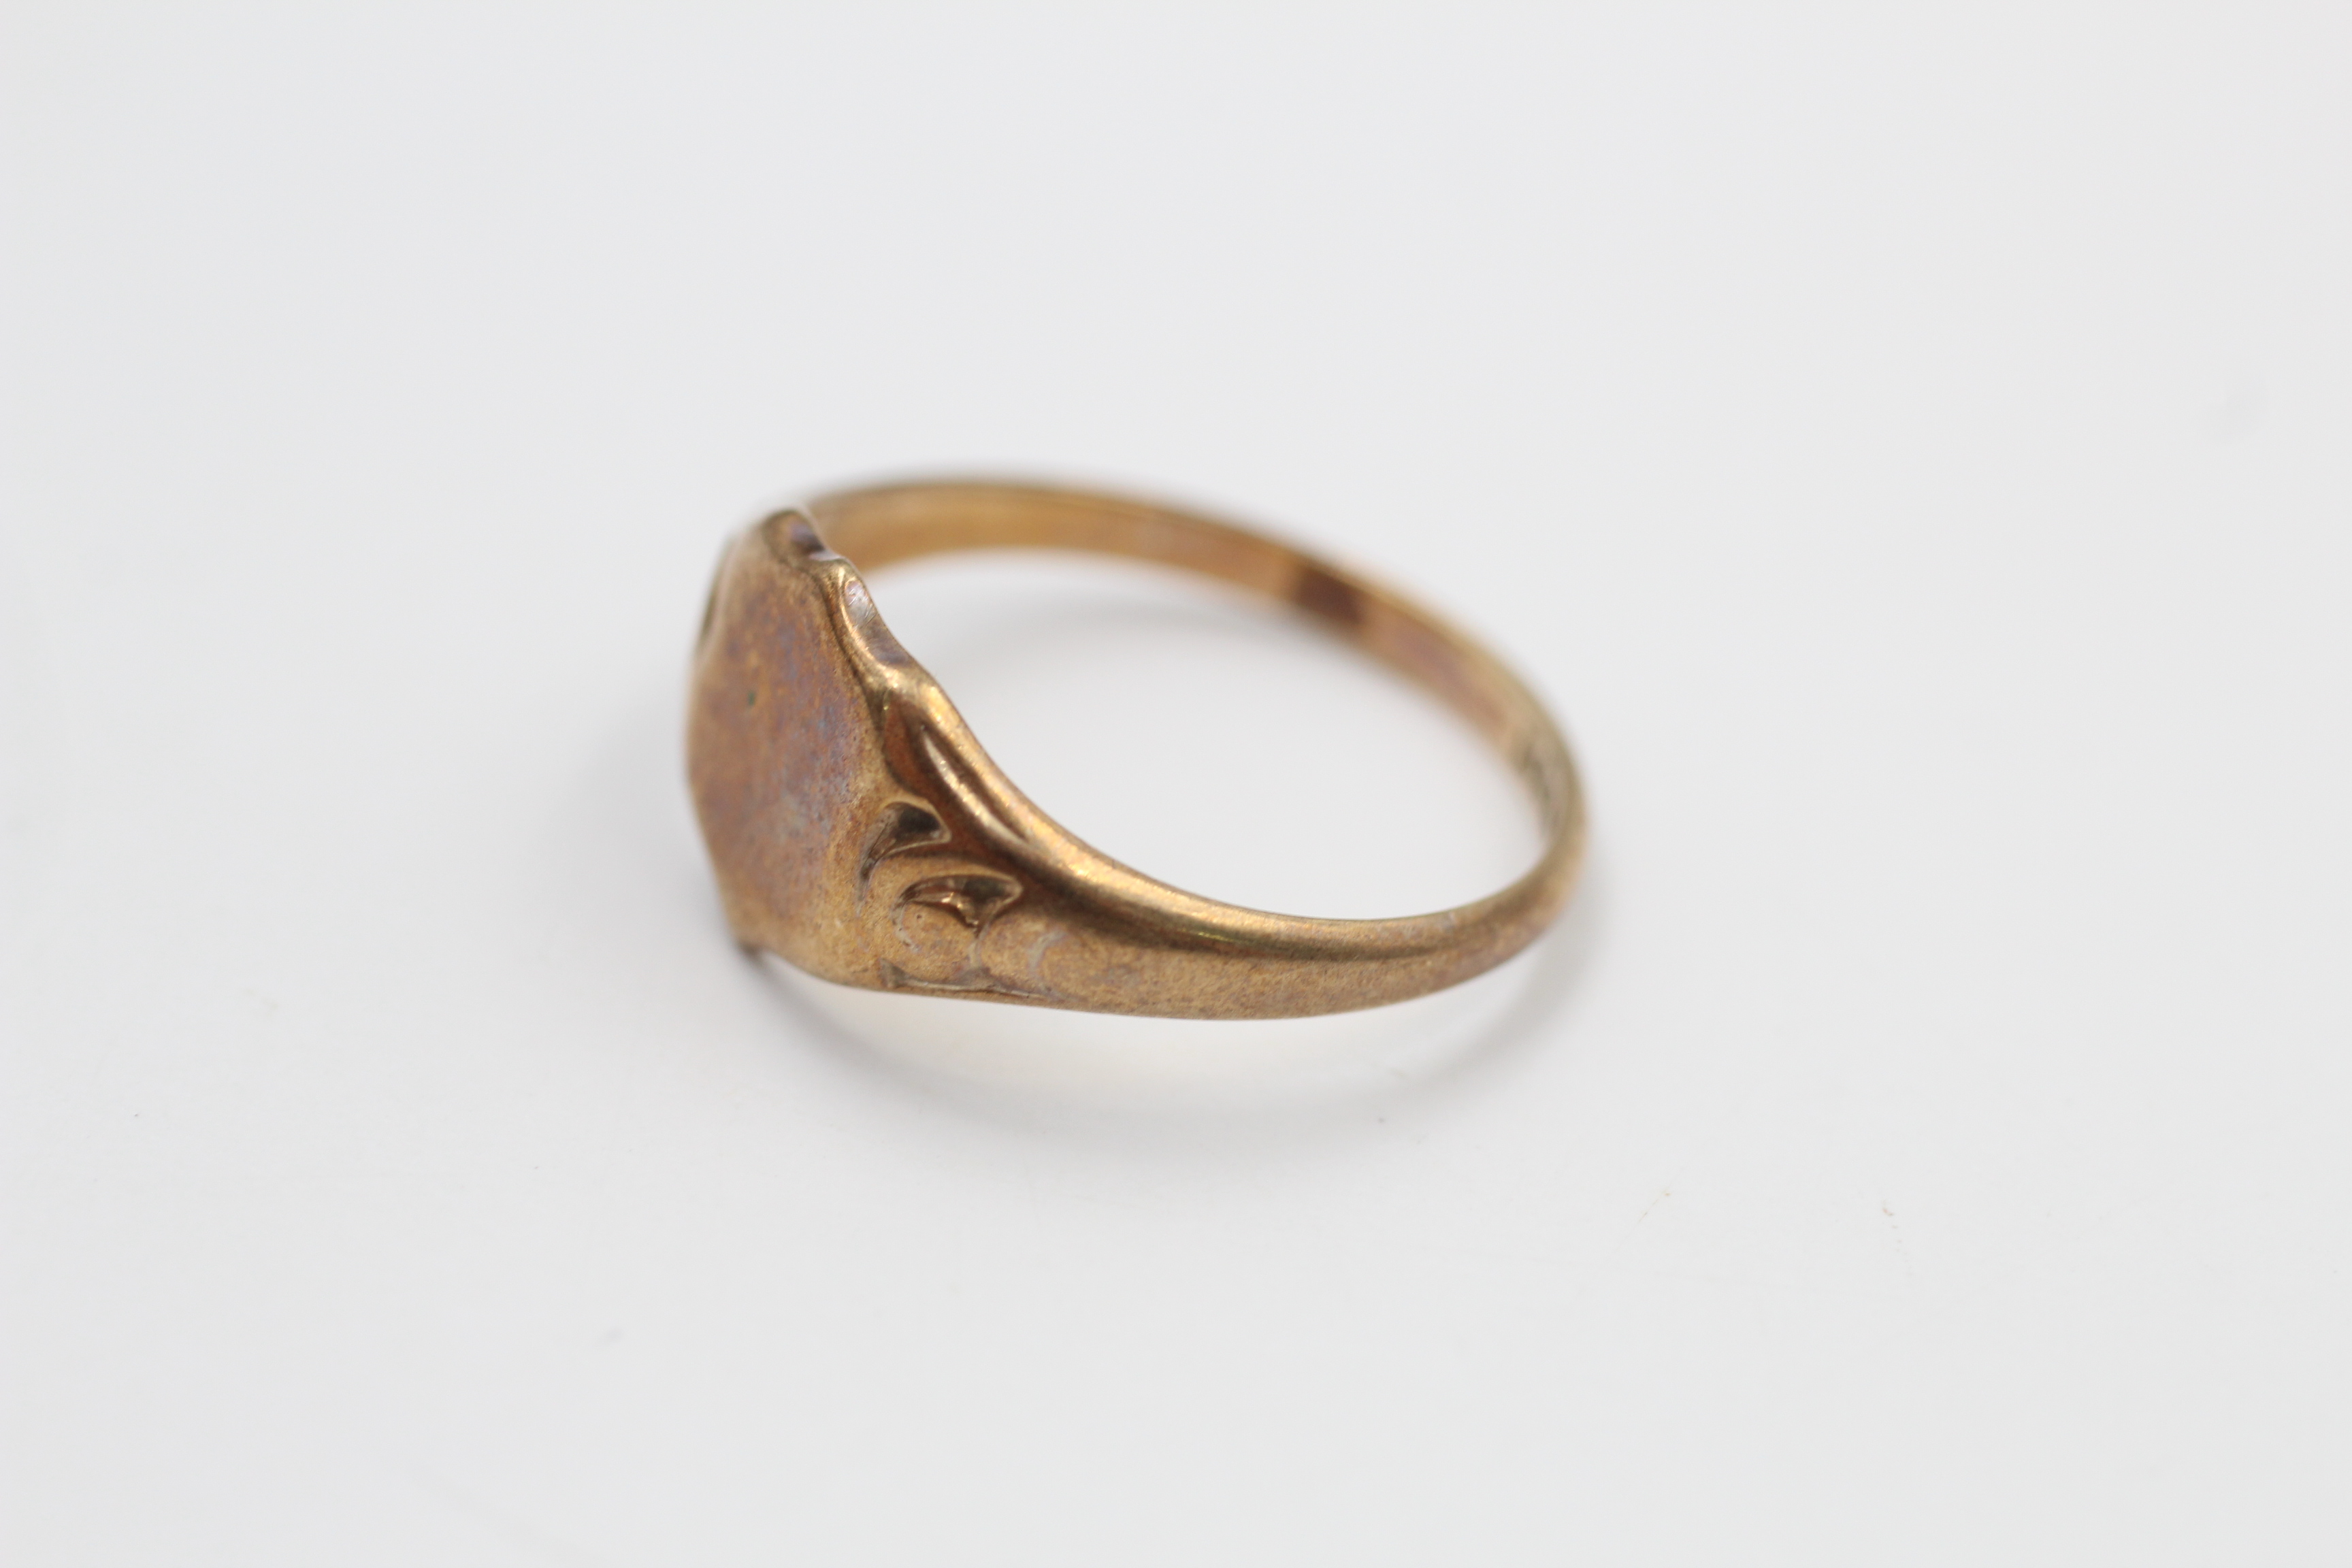 9ct gold vintage shield signet ring (2.2g) - Image 2 of 4